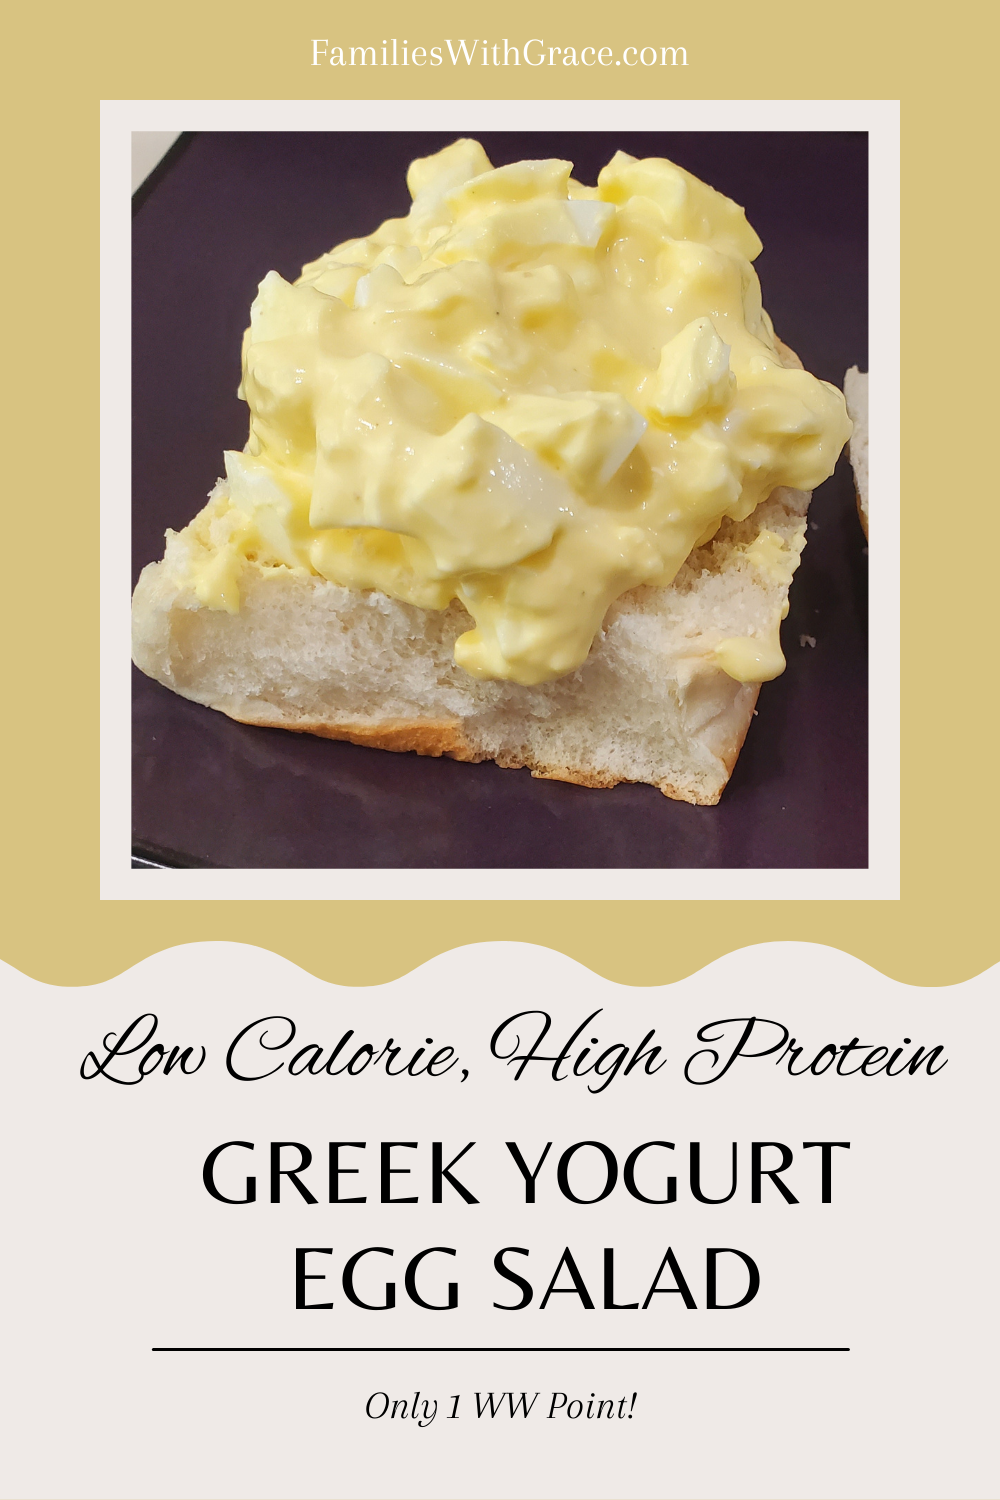 Greek yogurt egg salad recipe